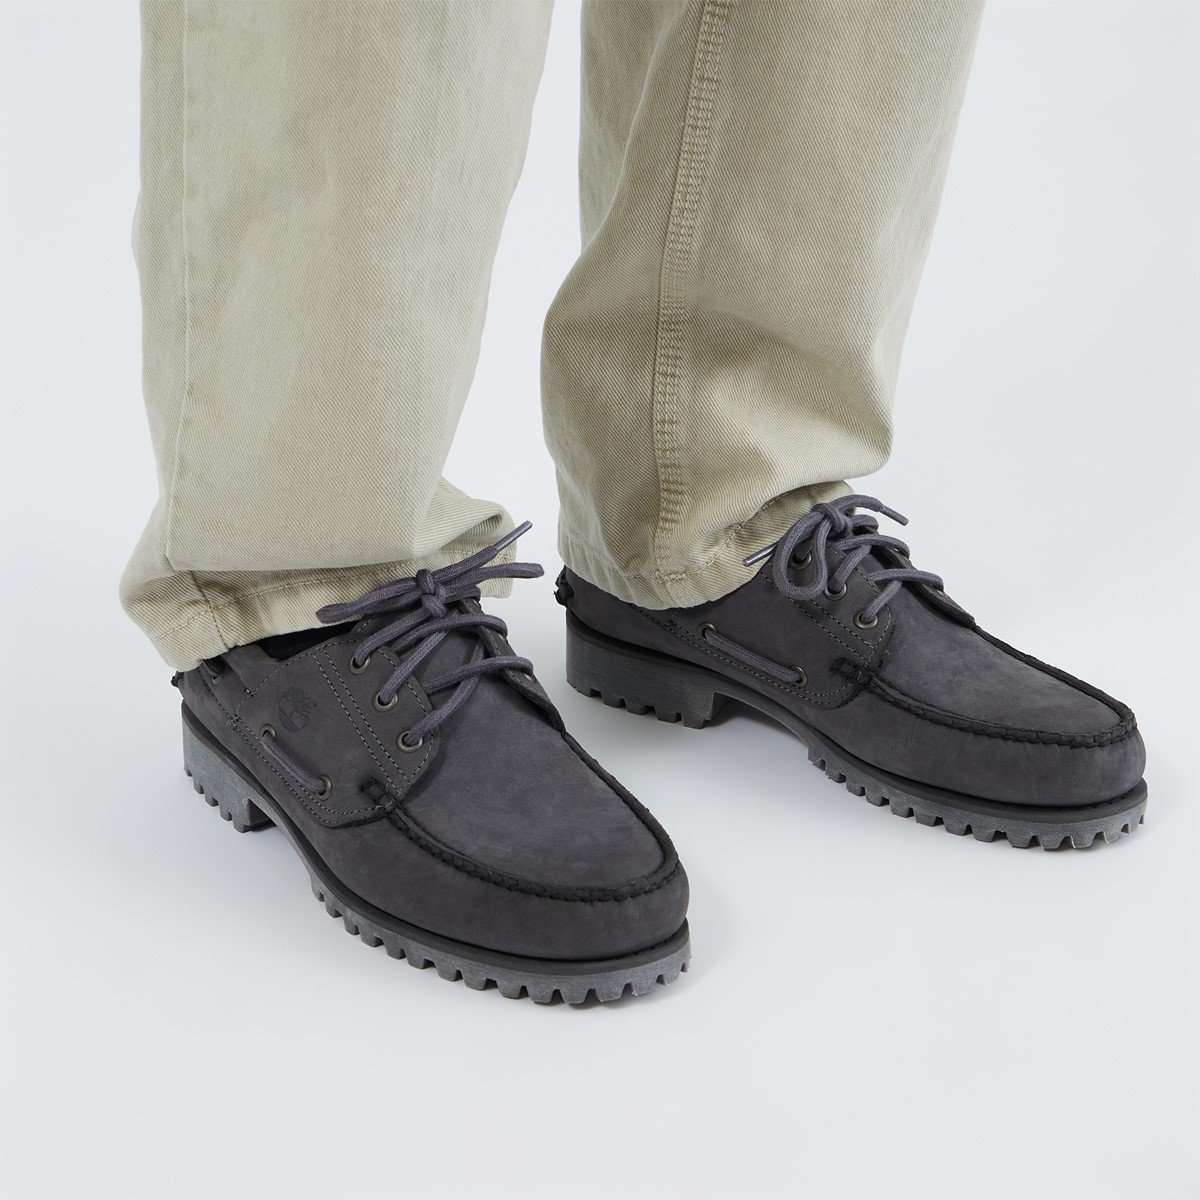 Men's 3-Eye Lug Handsewn Boat Shoes in Dark Grey